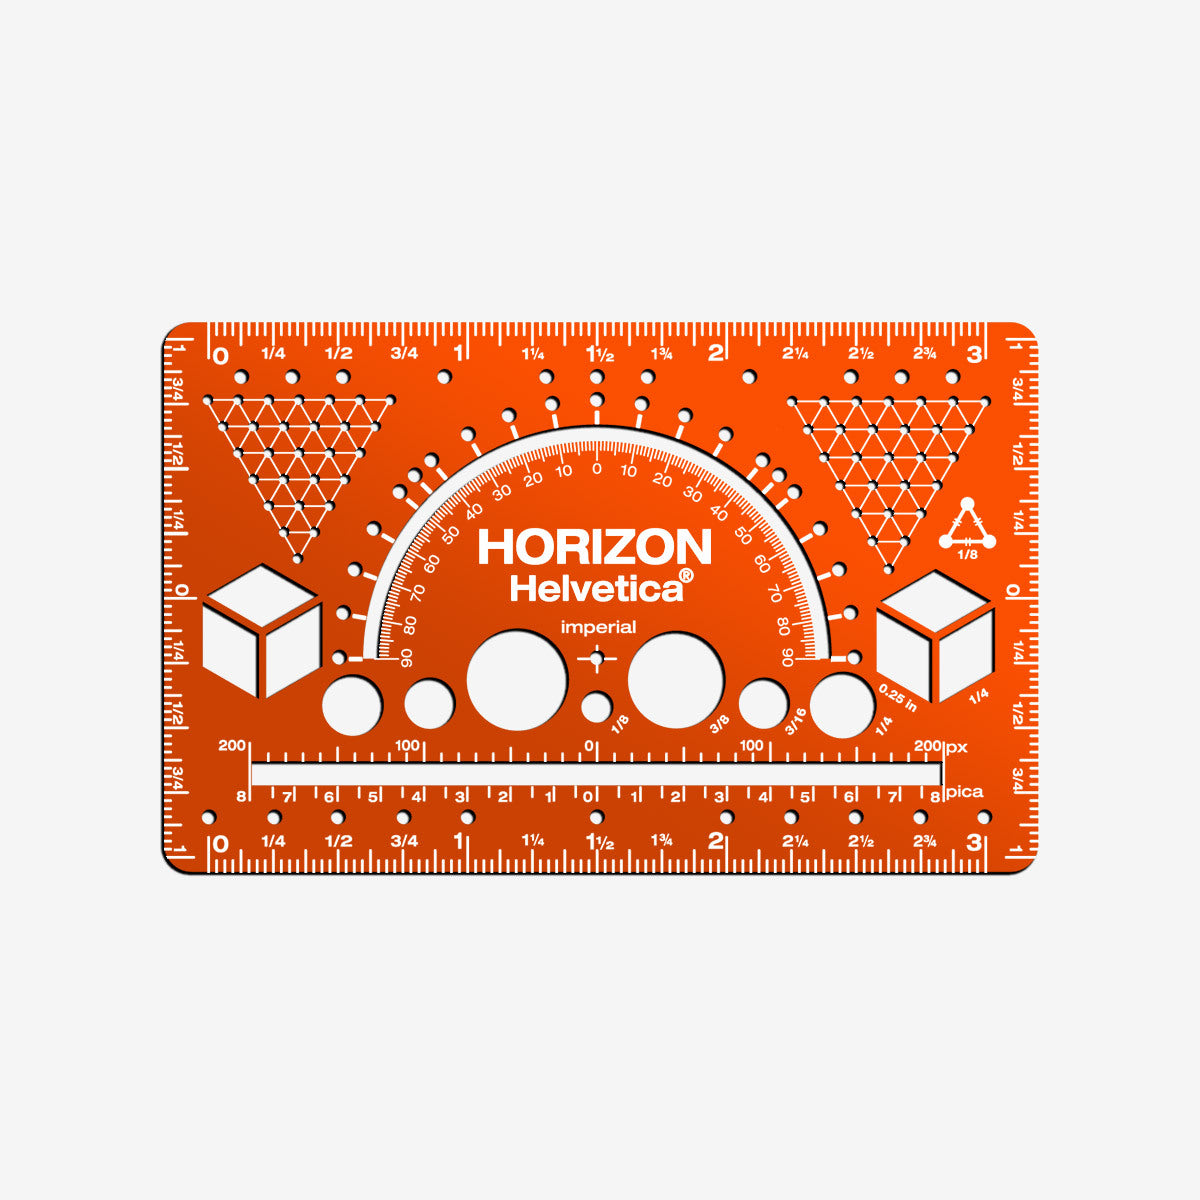 Horizon Helvetica® | Swiss army knife of sketch tools